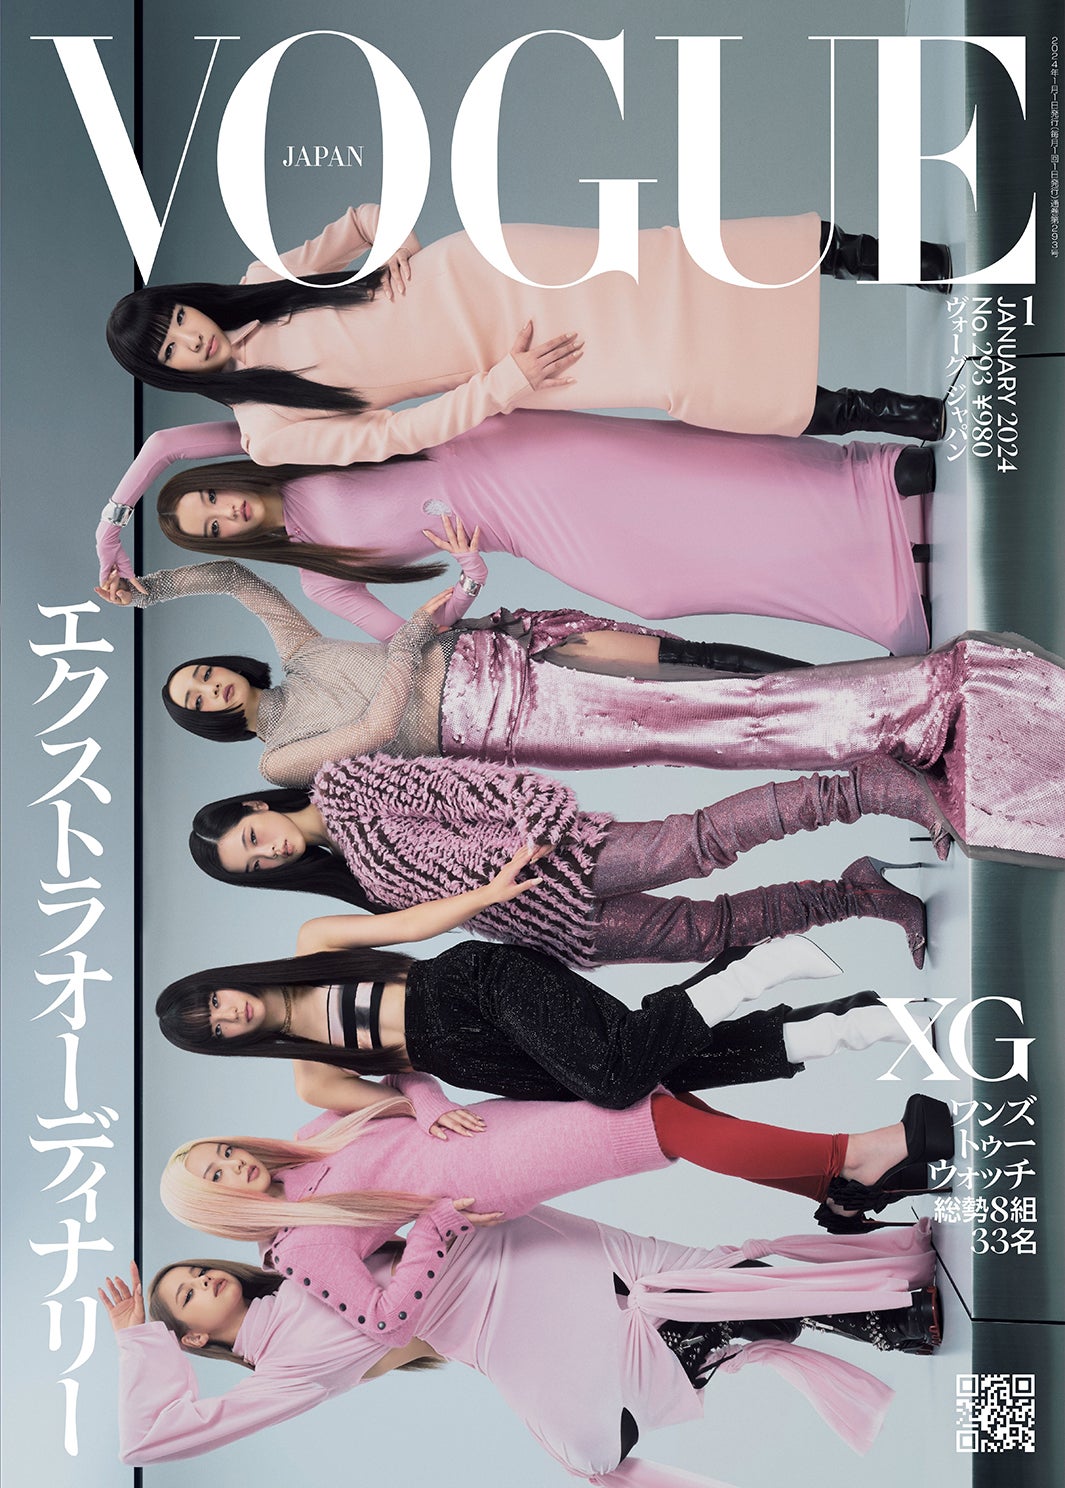 XG「VOGUE JAPAN」表紙初登場で圧巻スタイル披露 グループへの想い語る モデルプレス